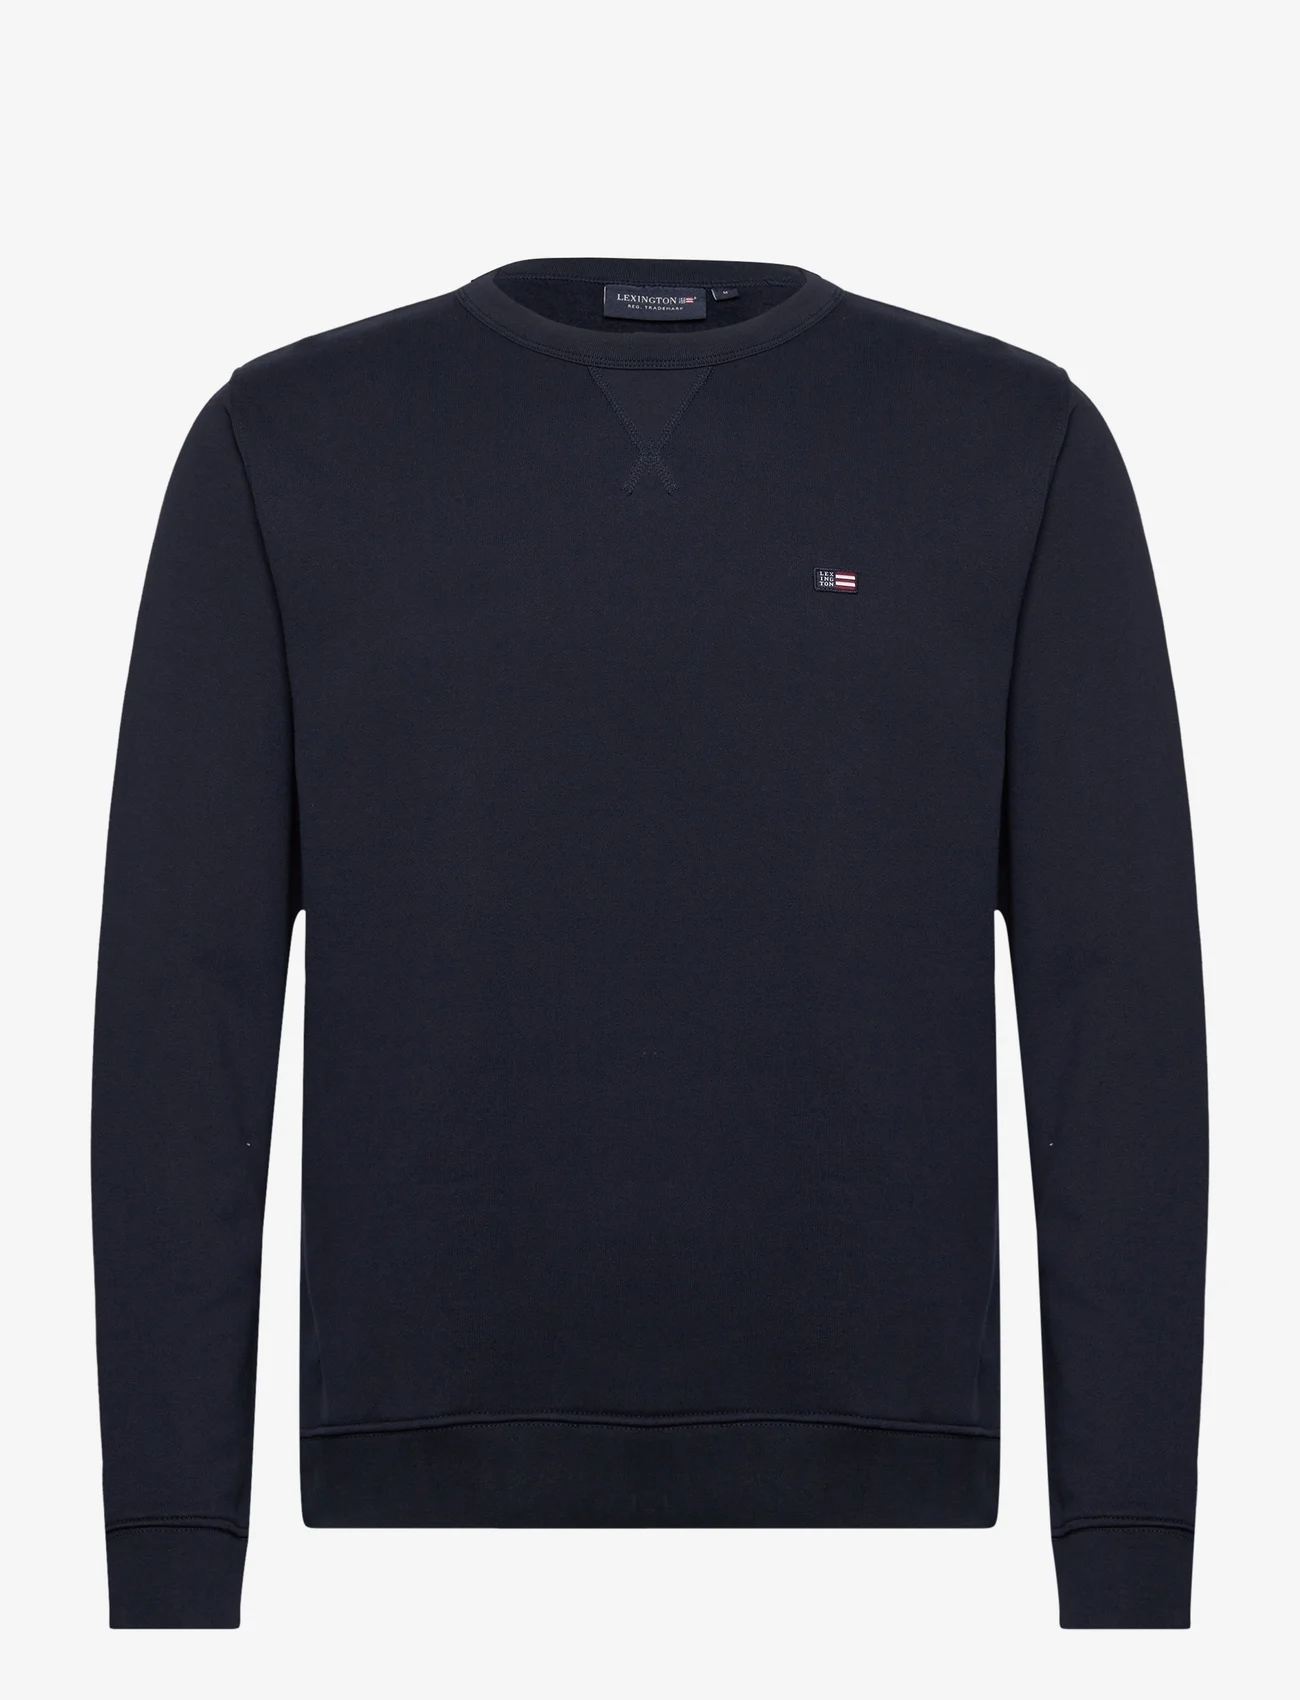 Lexington Clothing - Matteo Organic Cotton Crew Sweatshirt - truien - dark blue - 0